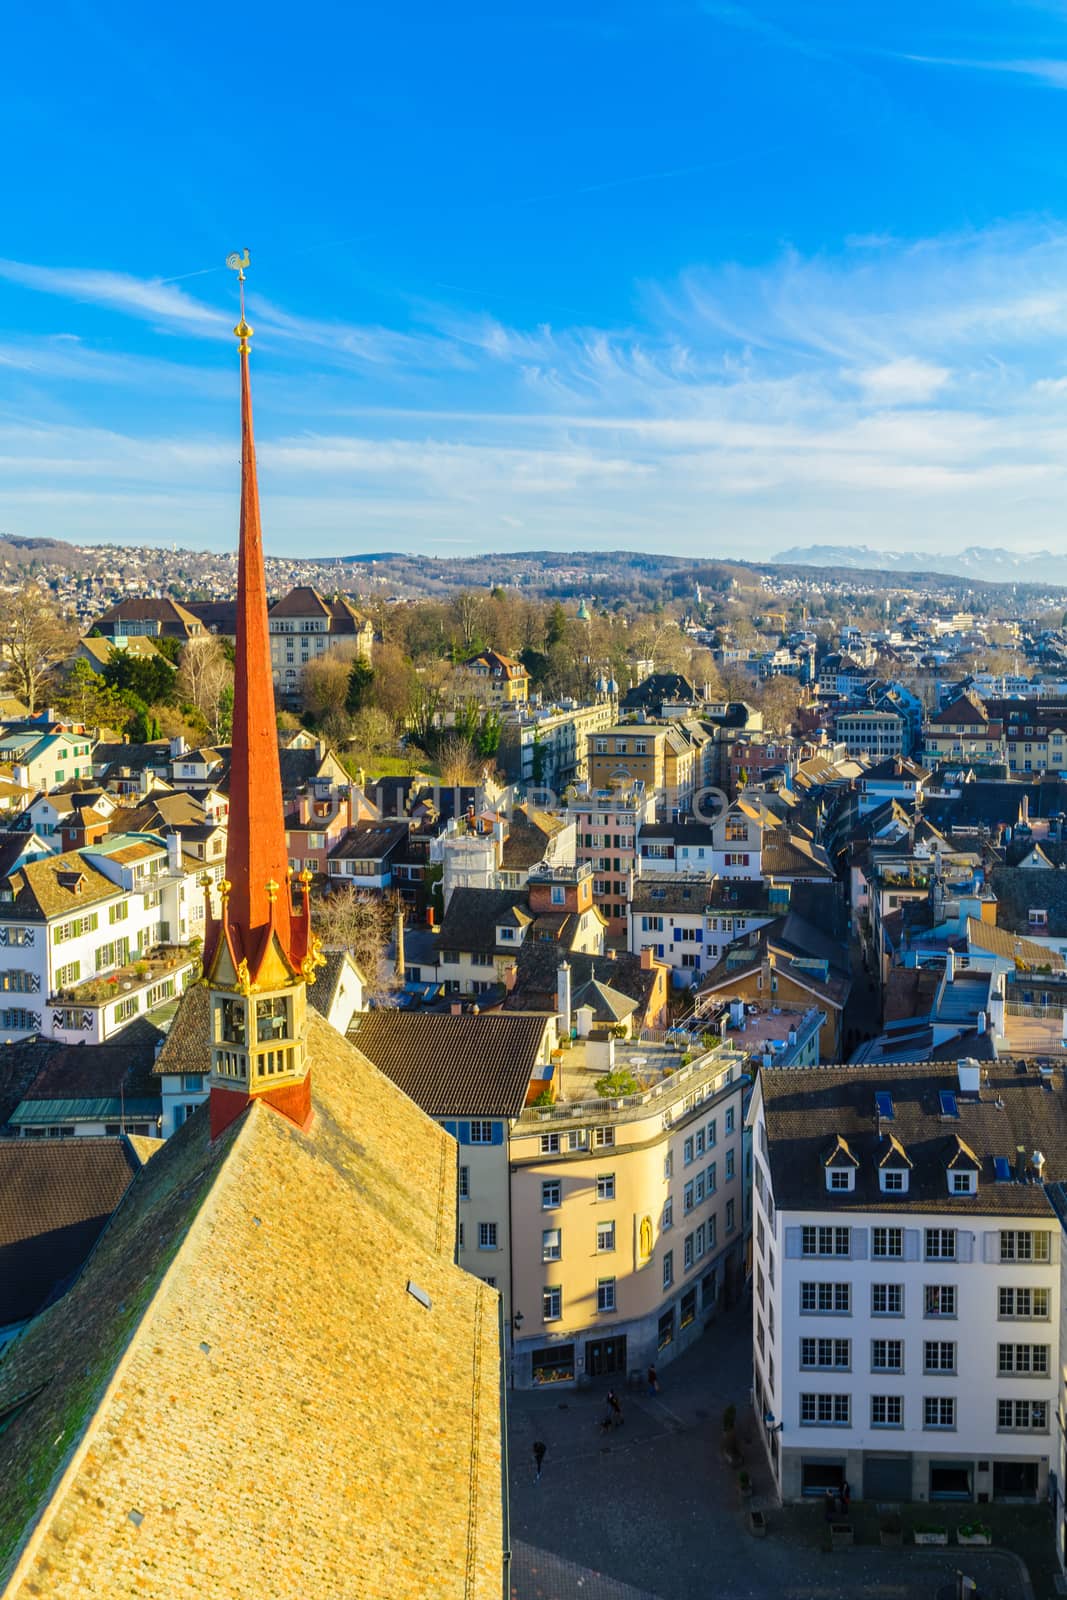 An aerial view of the Old Town (Altstadt) of Zurich, Switzerland